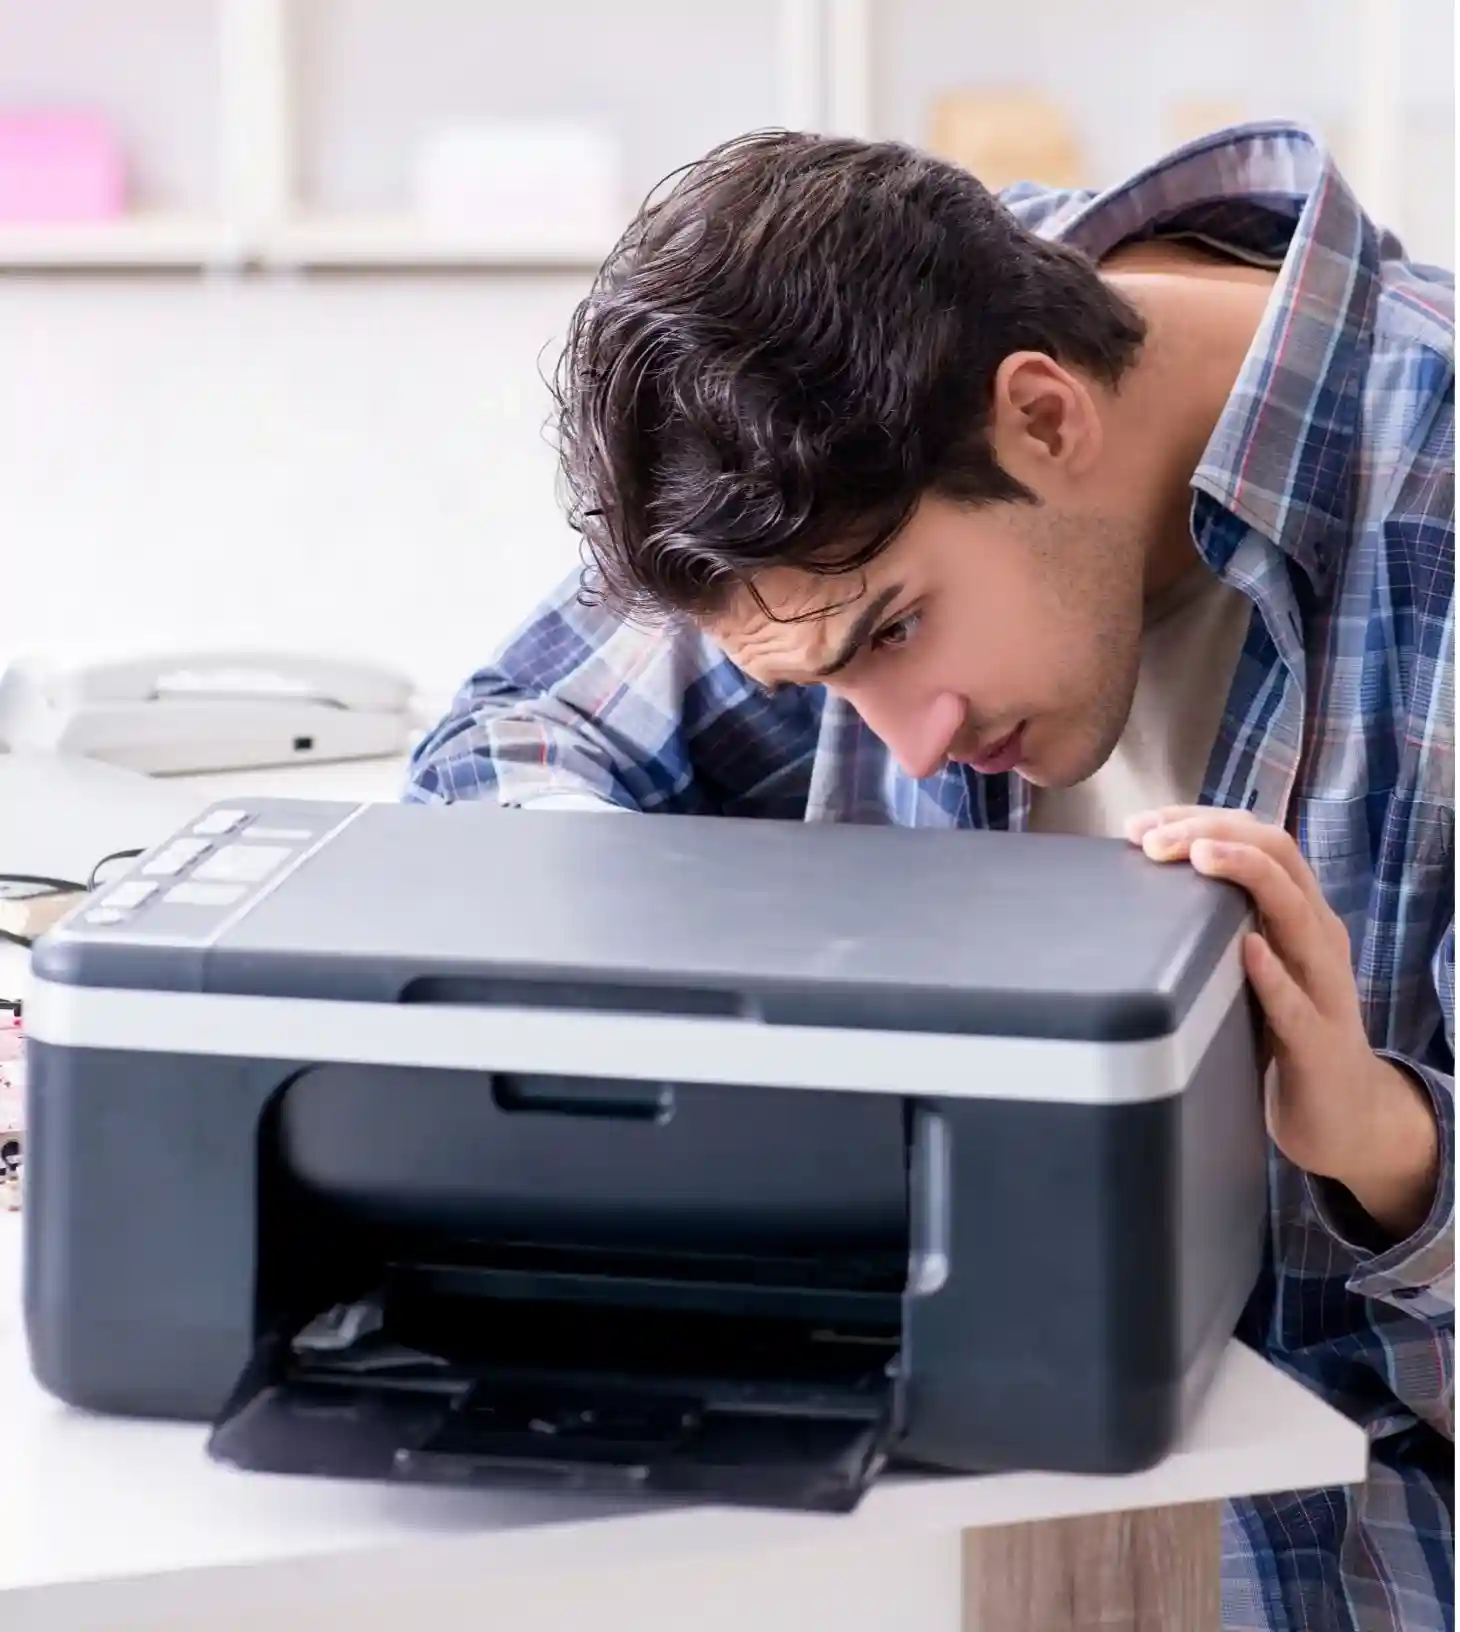 Installer une imprimante